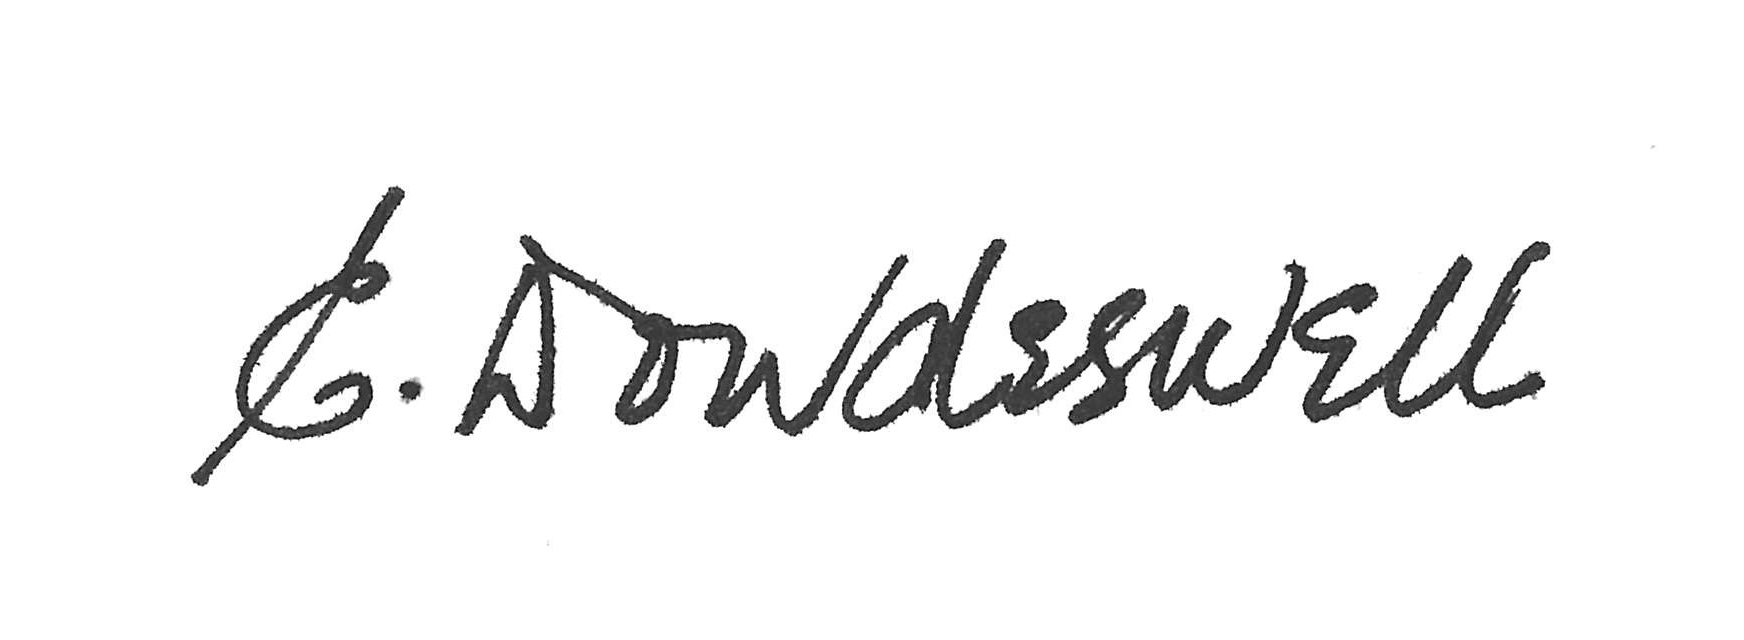 Signature of E. Dowdeswell